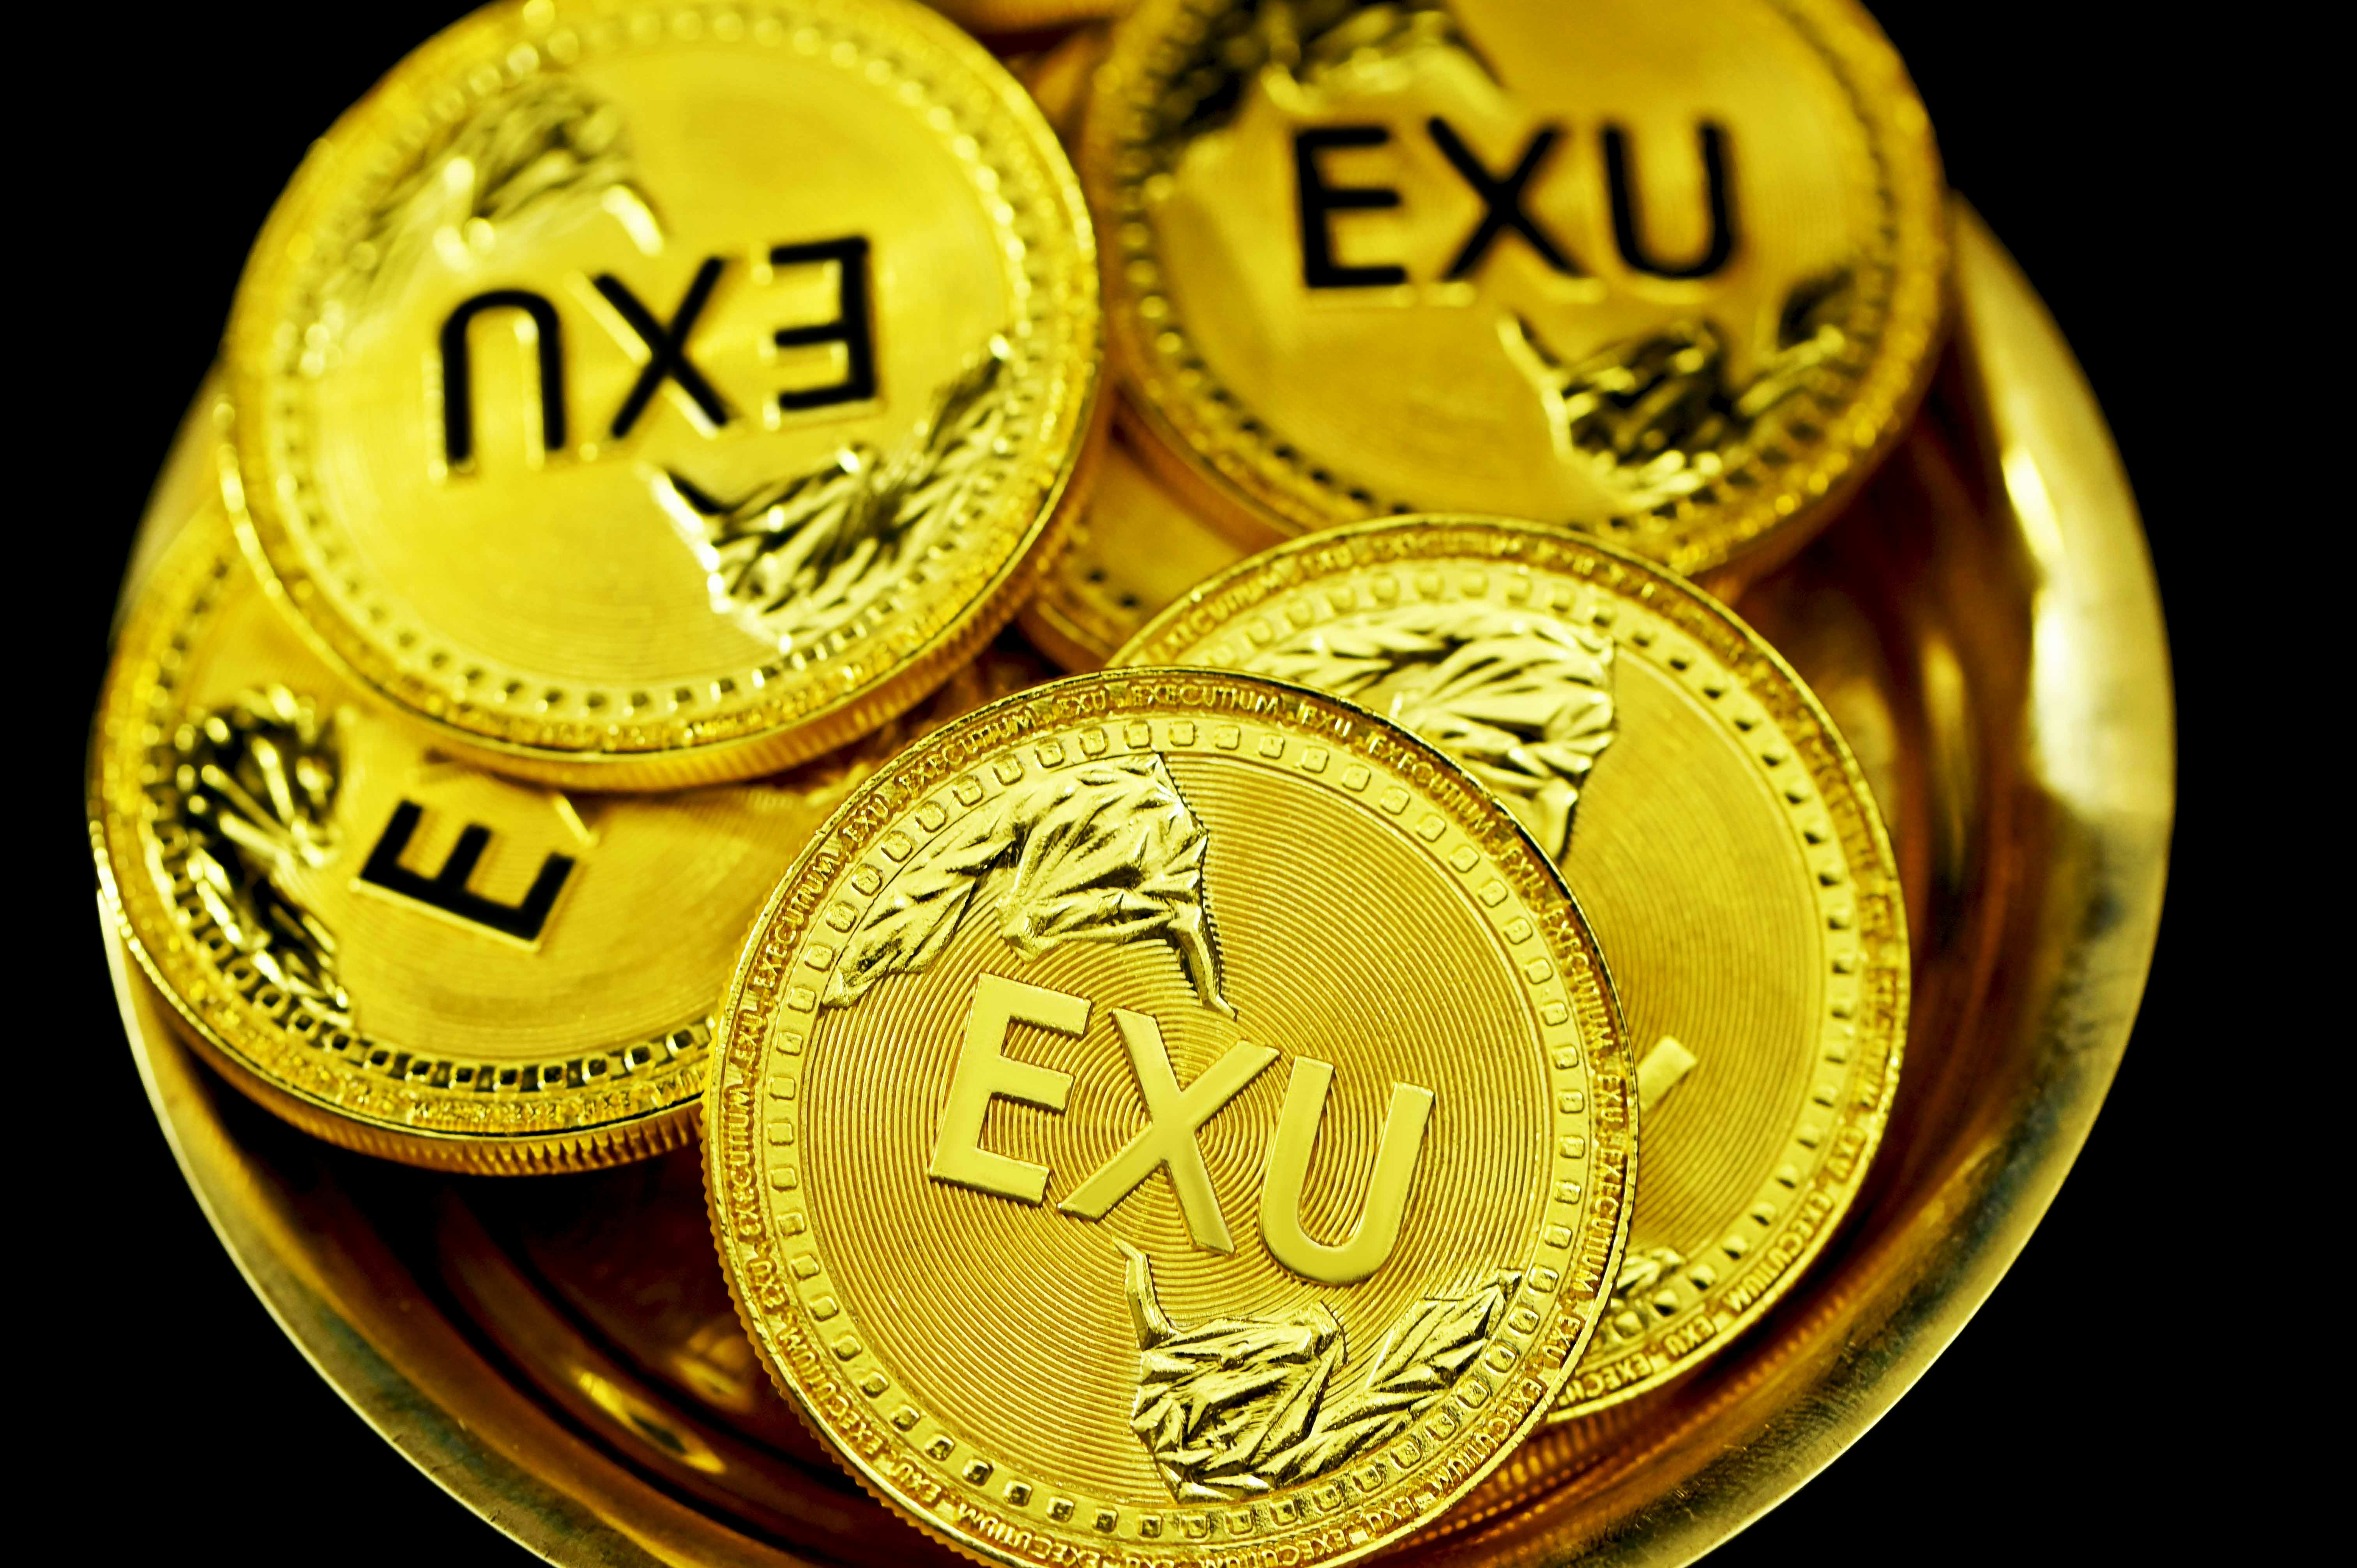 EXU coins in a golden bowl